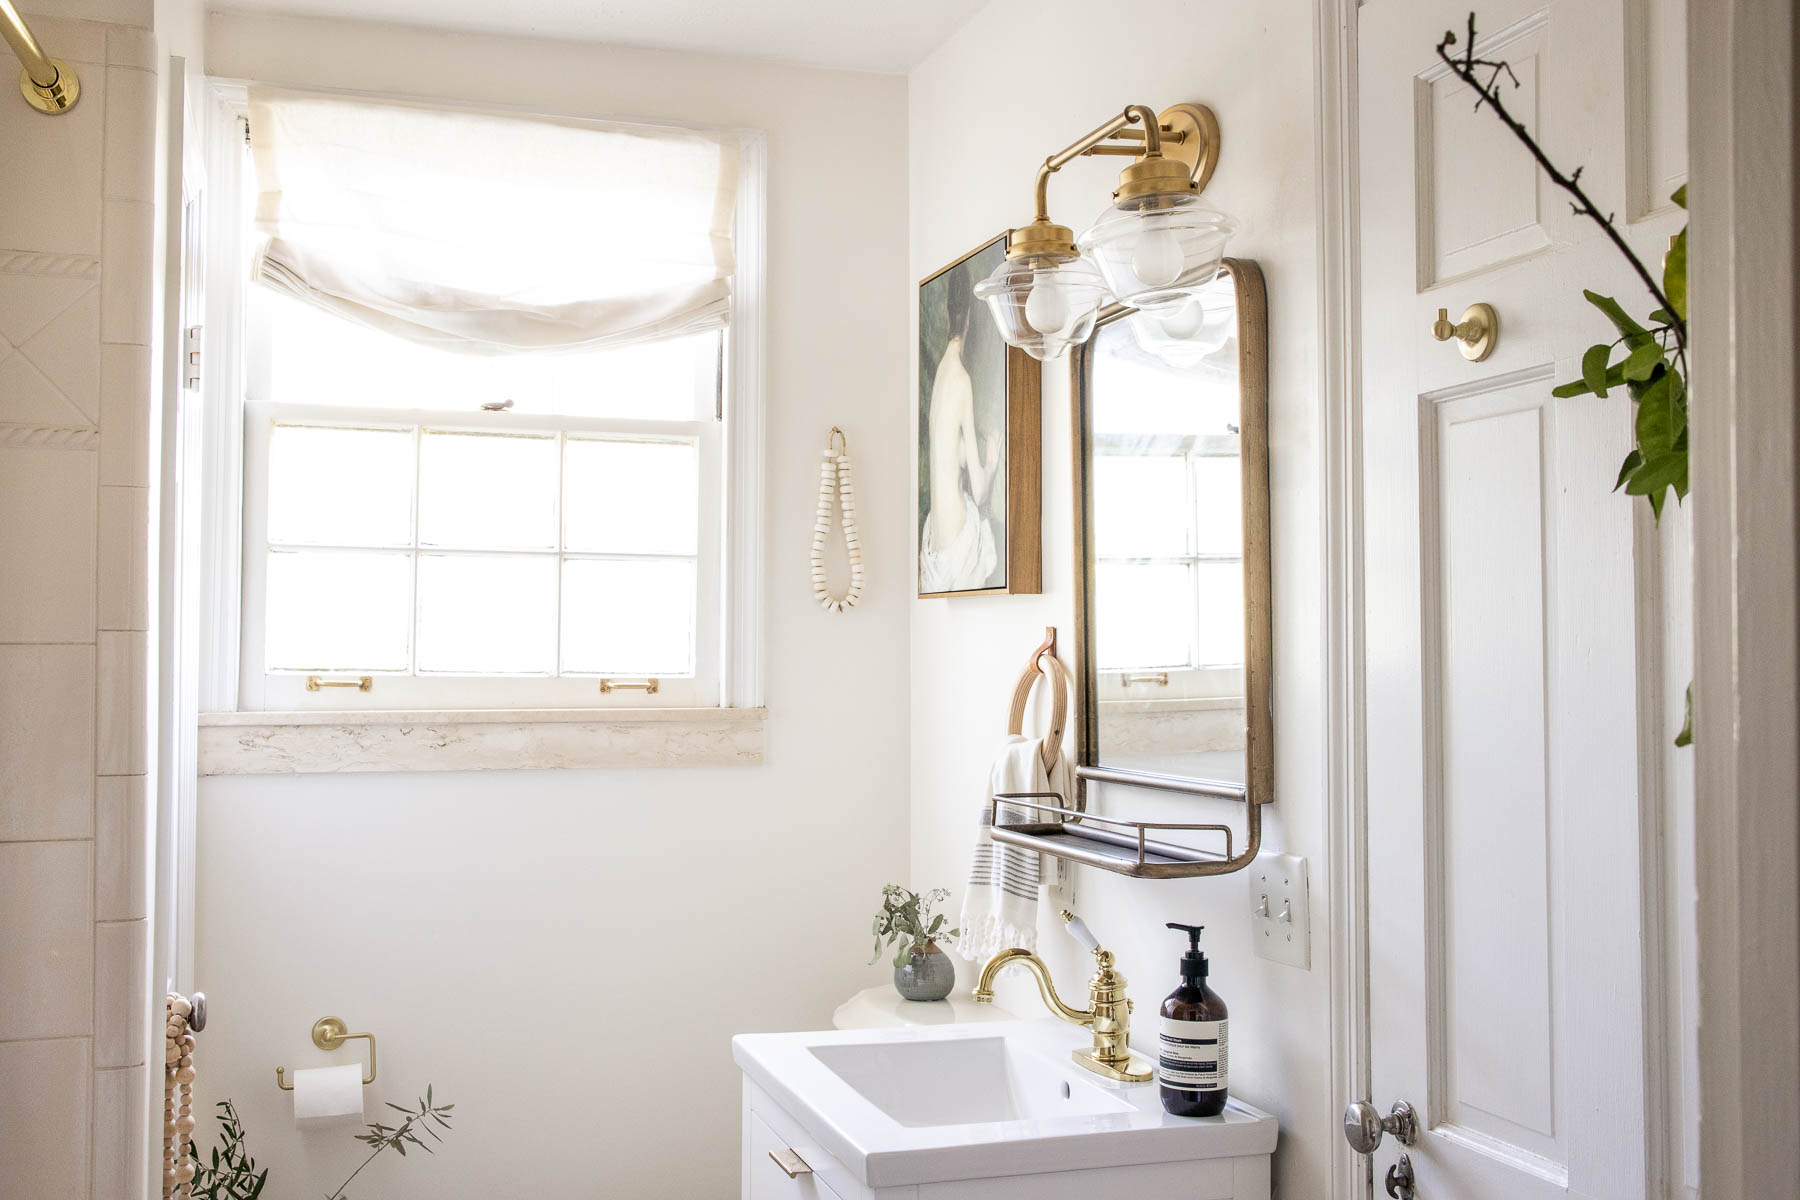 How High Should A Light Be Above A Bathroom Mirror